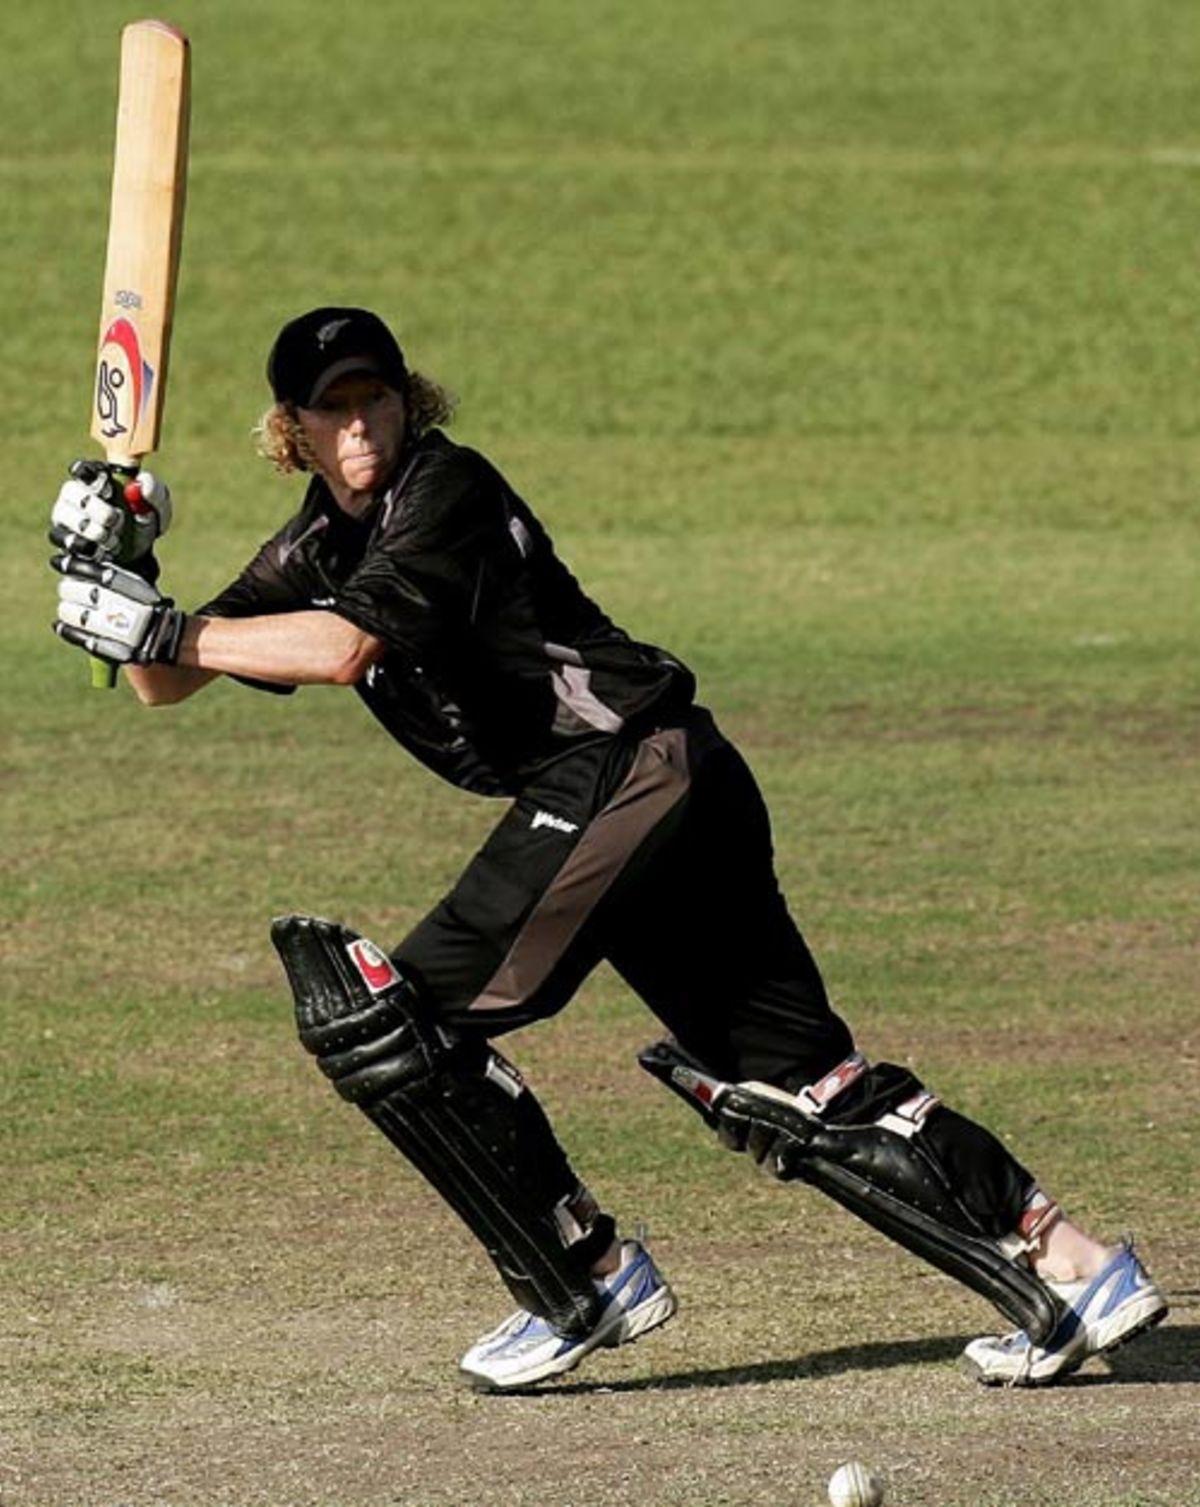 Haidee Tiffen's unbeaten 66 helped New Zealand overhaul Australia's score, Australia women v New Zealand women, 5th ODI, Rose Garden, Darwin, July 29, 2007